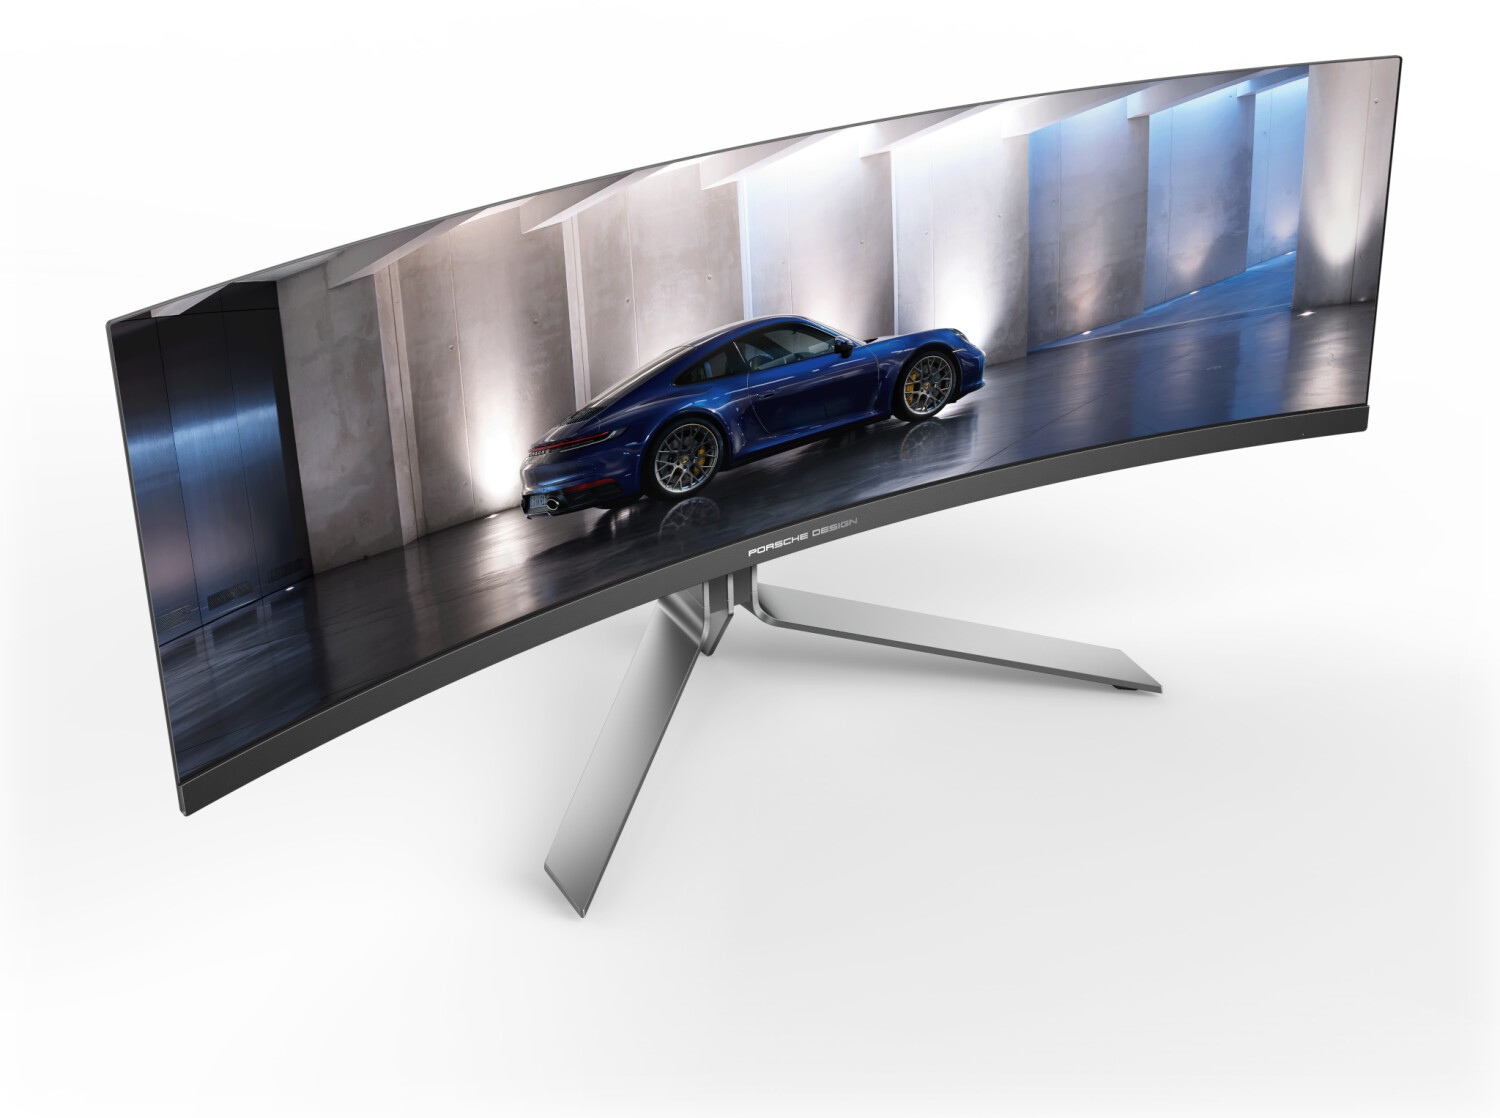 AOC AGON PRO PD49: New Porsche Design curved gaming monitor